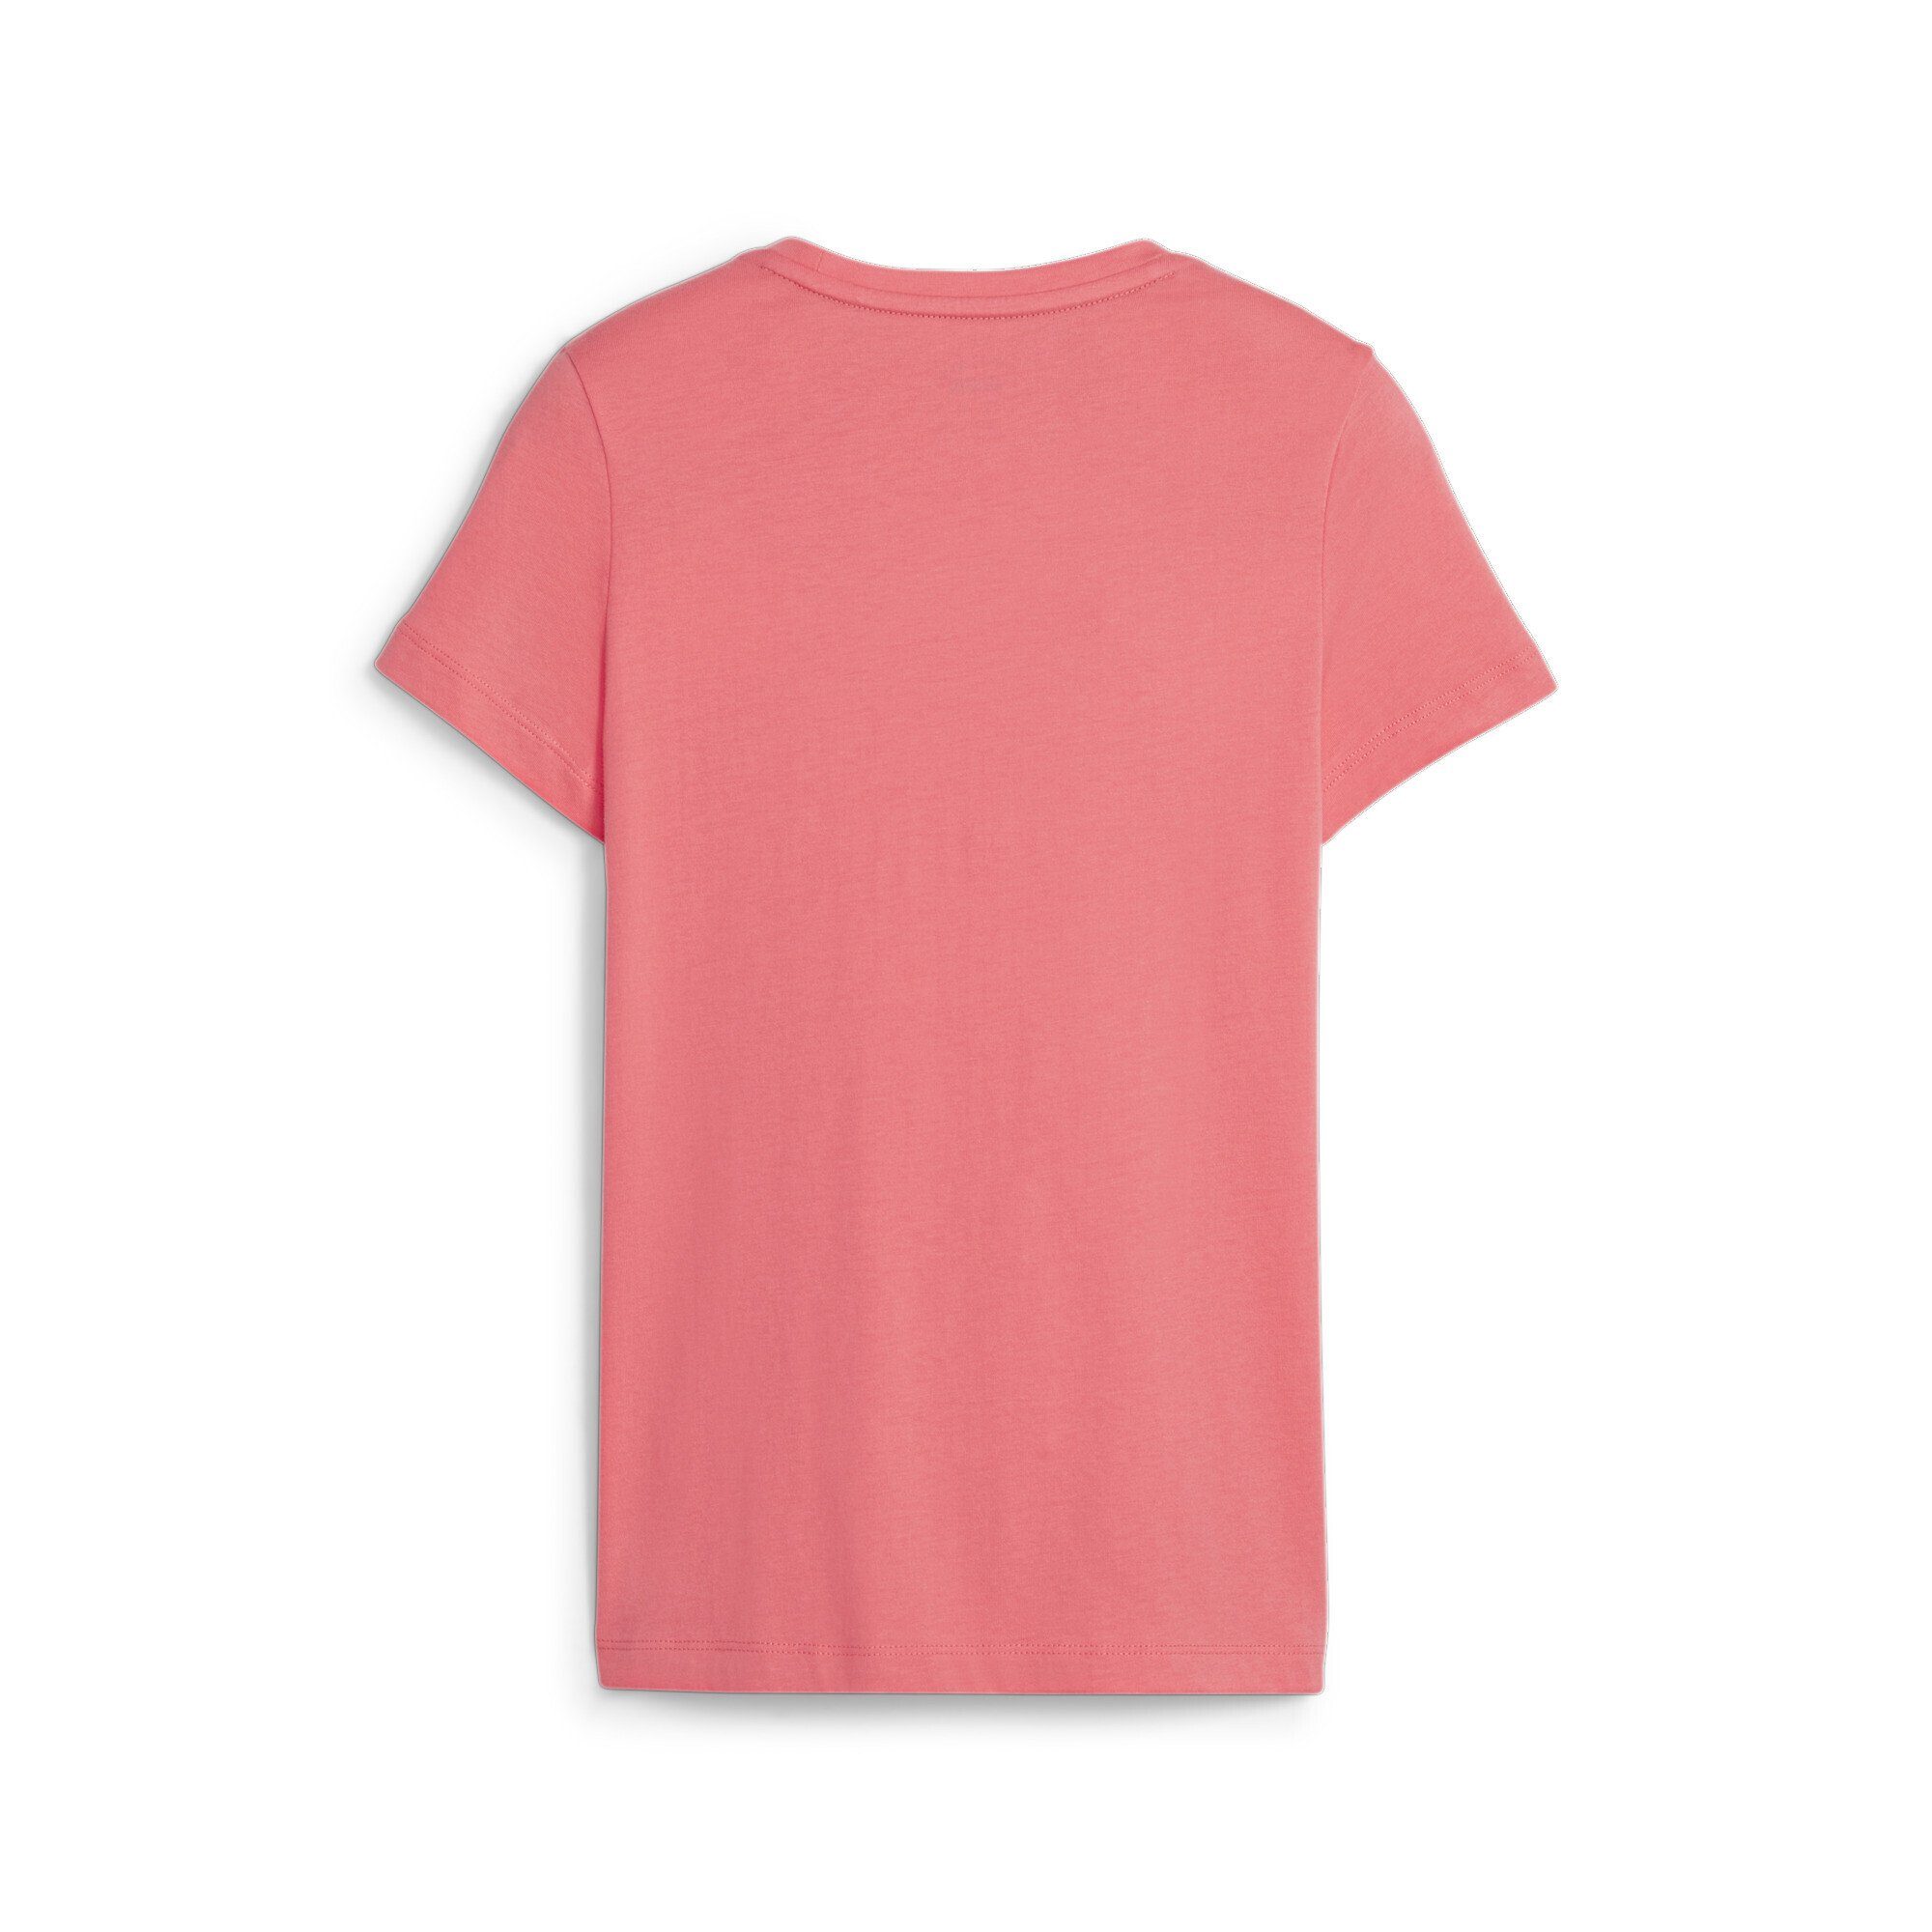 mit Mädchen Essentials PUMA T-Shirt Blush T-Shirt Pink Electric Logo